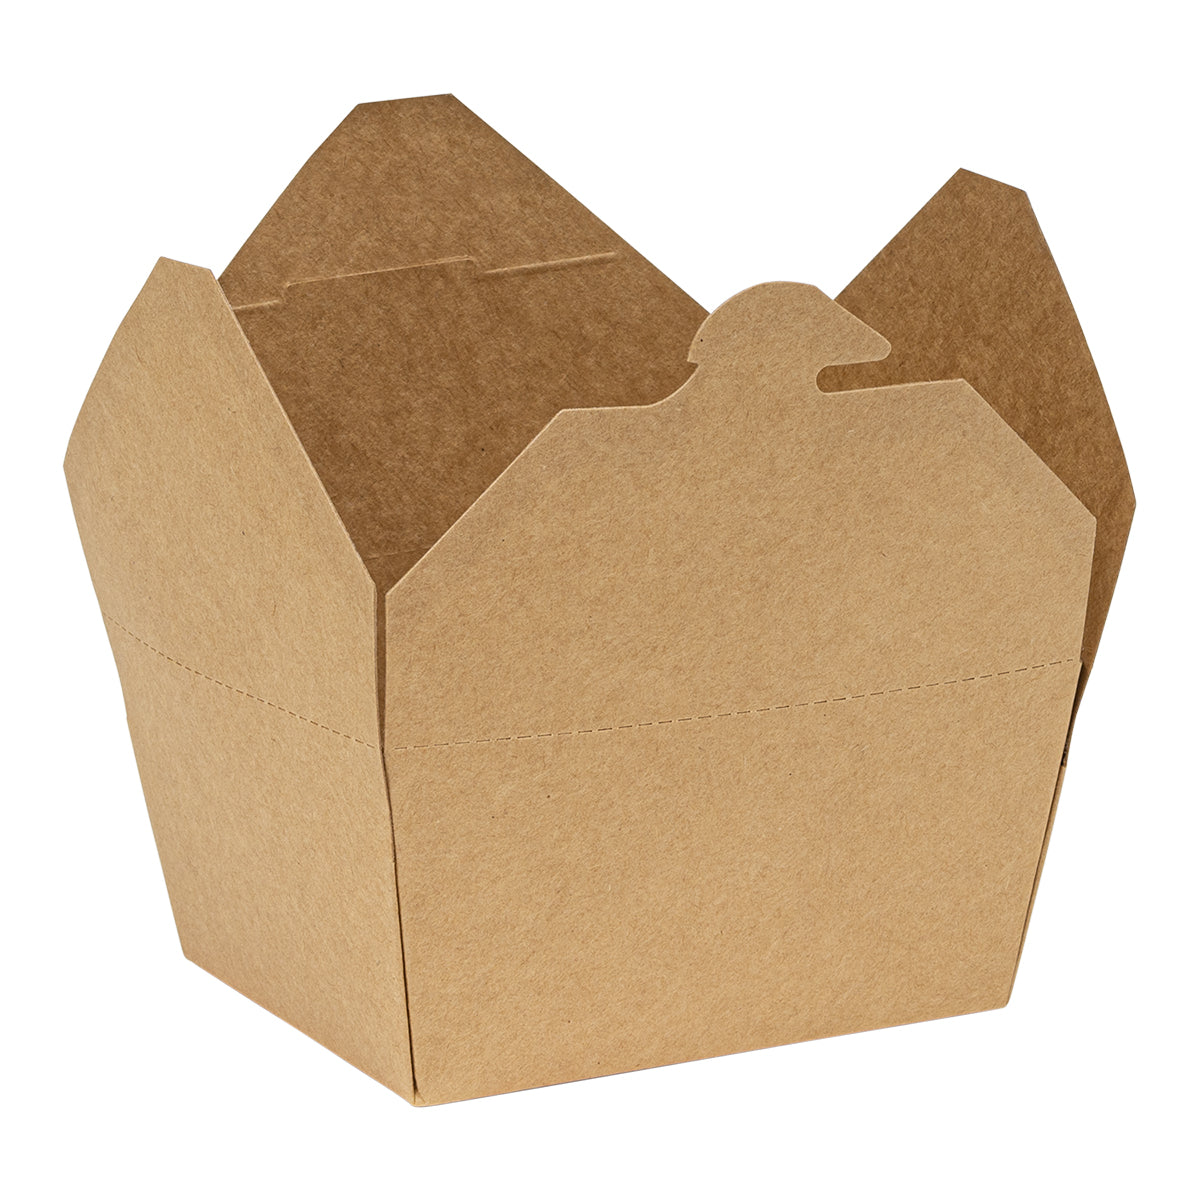 26 oz Recycled Kraft Paper Food Box